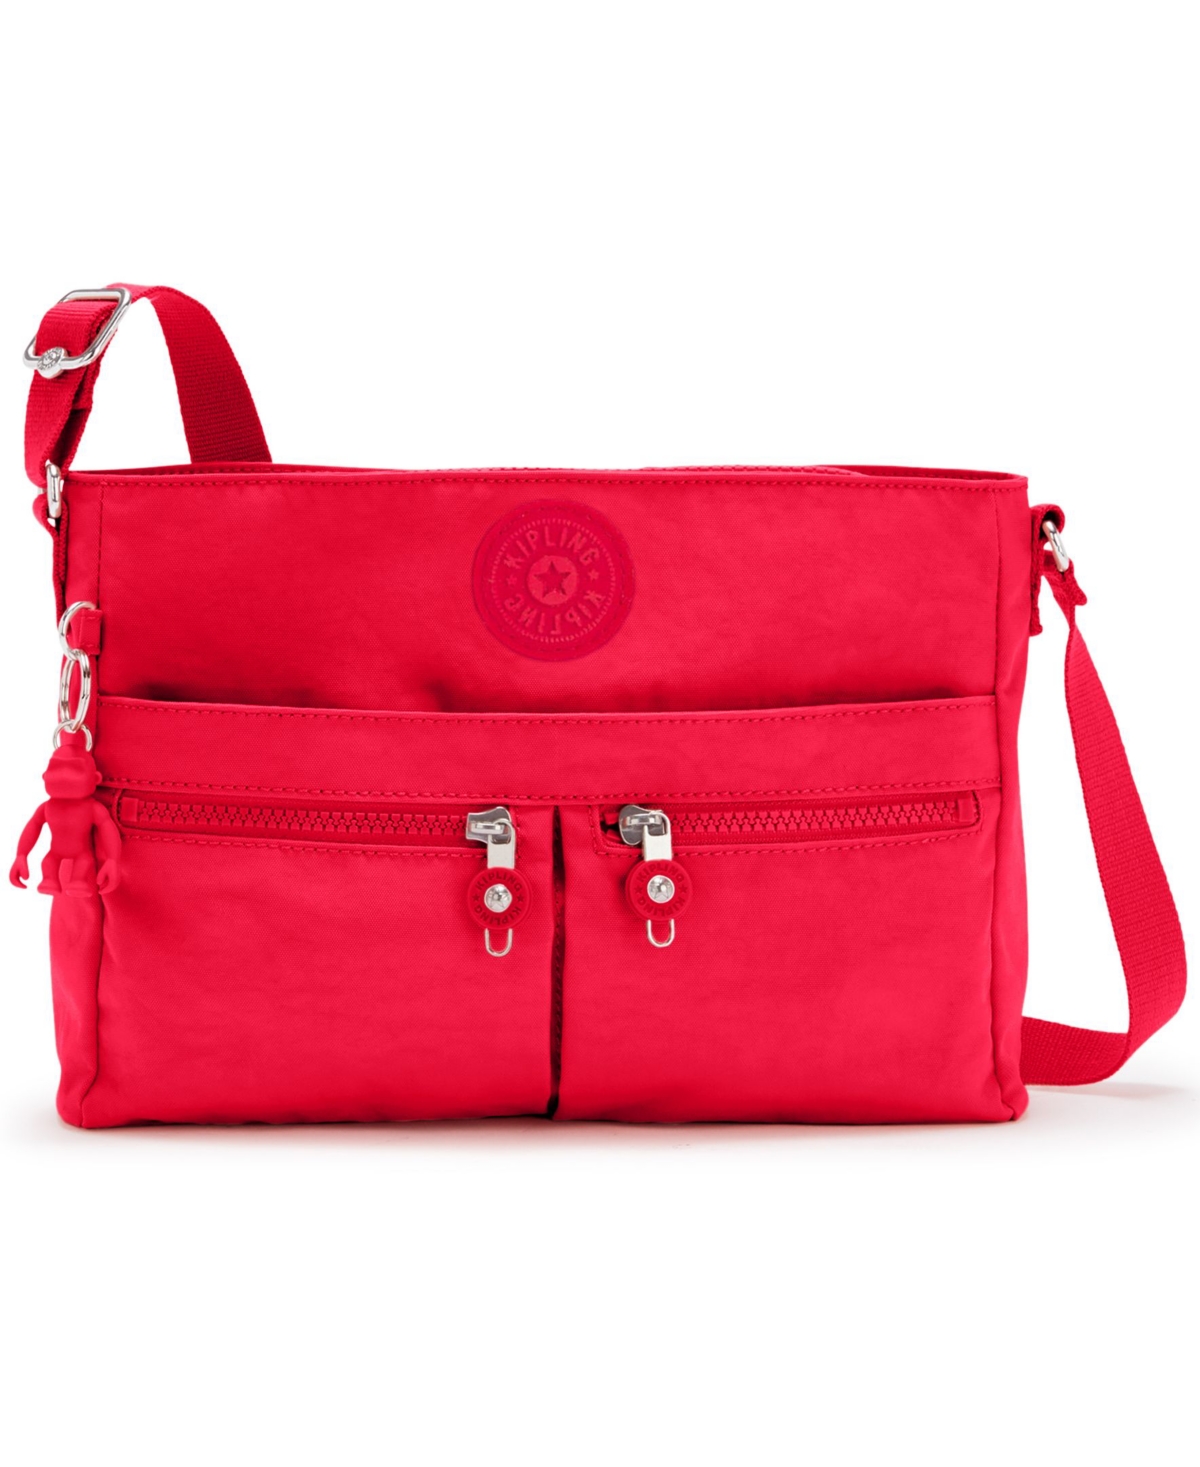 Kipling New Angie Handbag In Red Rouge